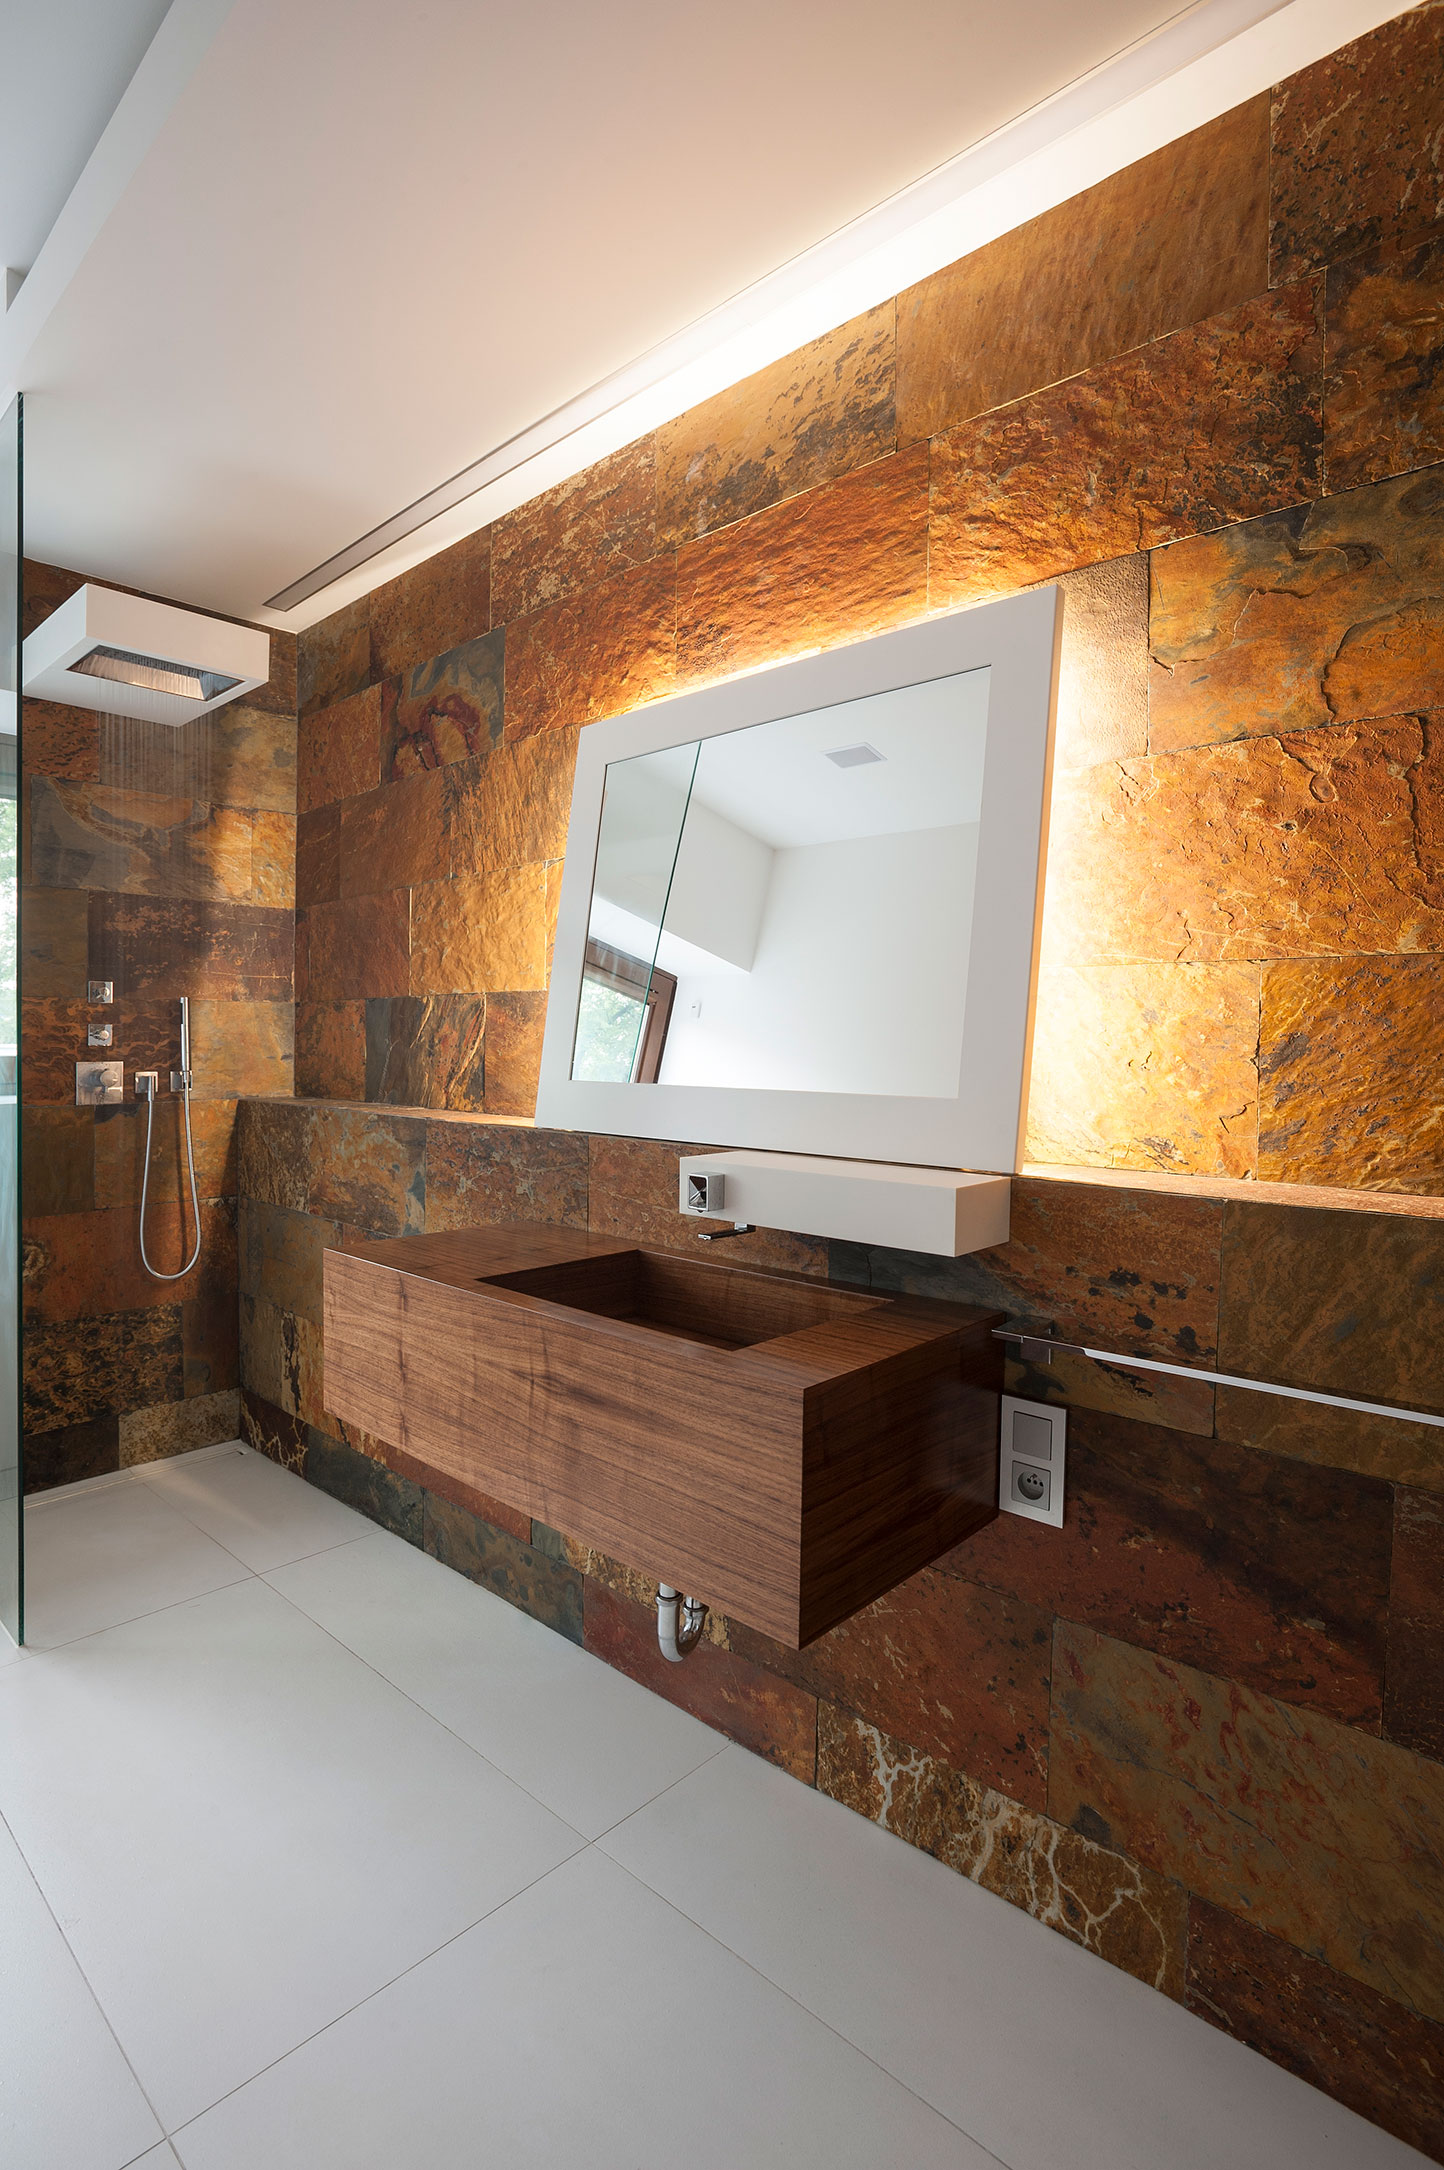 Image no. 1 of Custom bathroom in wood - Mobius: Edge House